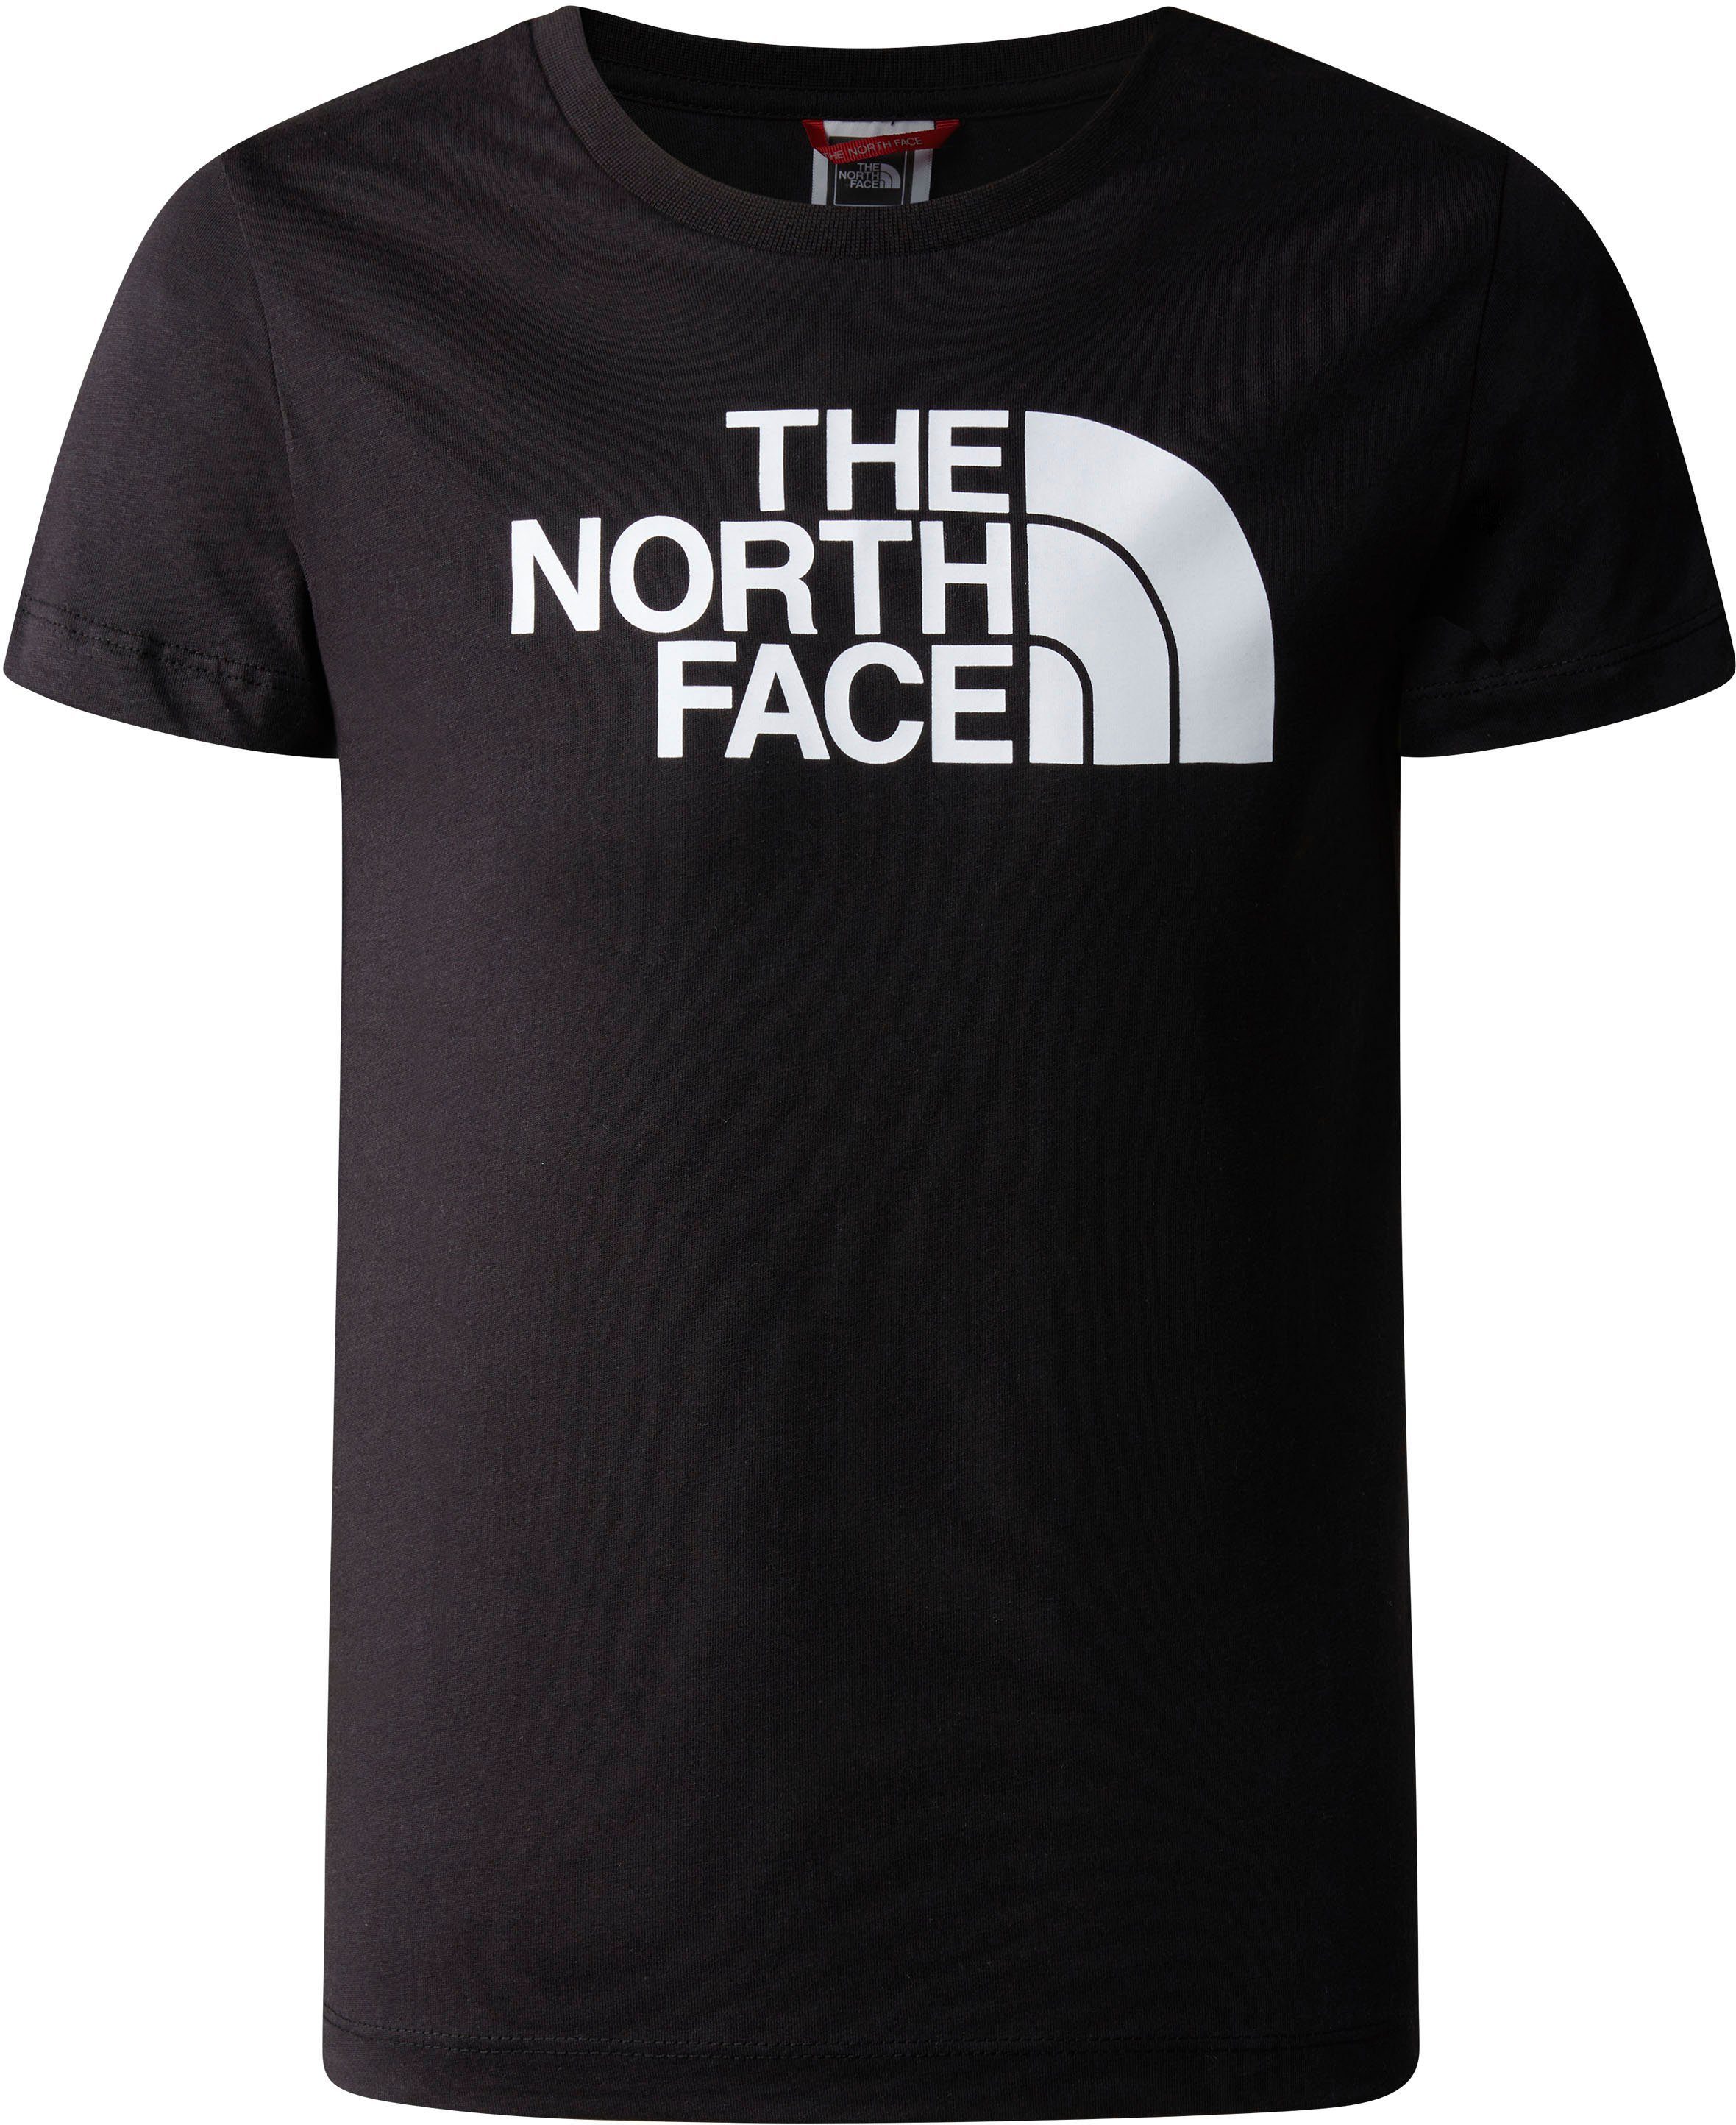 billig verkaufen The North Face tnf black-tn - Kinder TEE EASY für T-Shirt